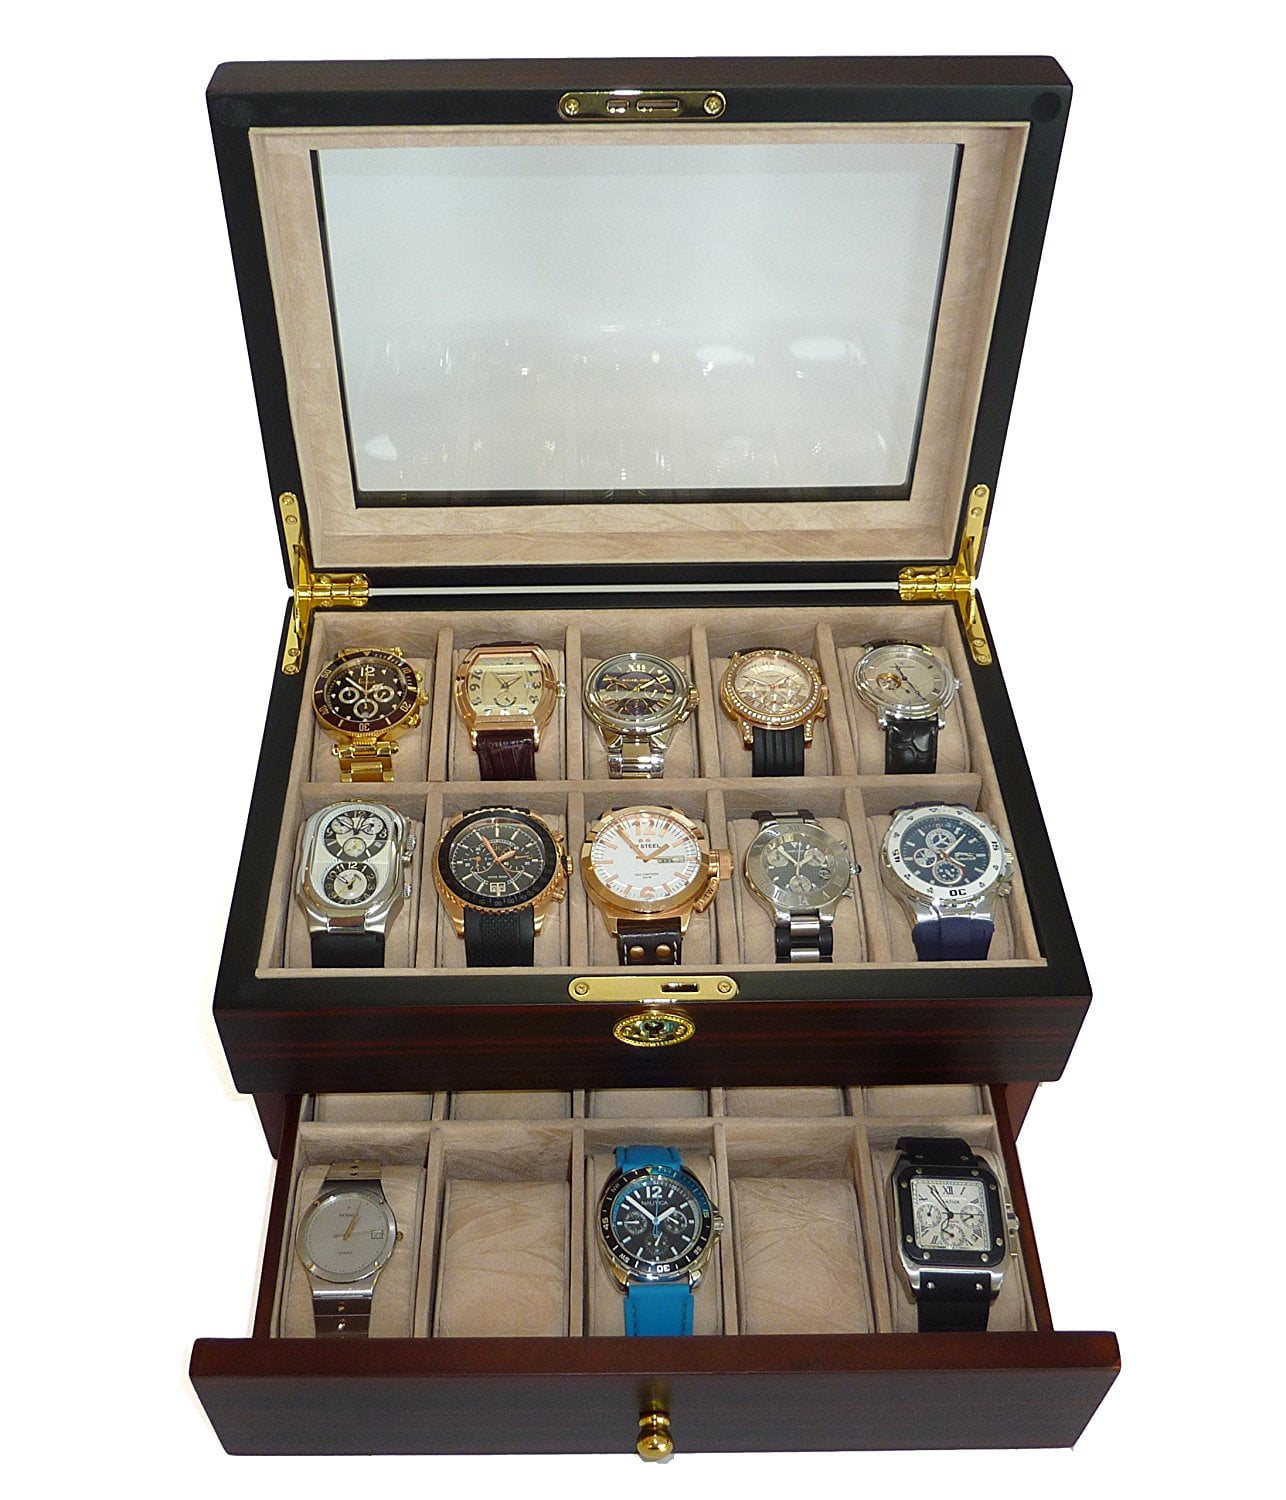 Yescom 6 Slots Walnut Wood Watch Display Case Glass Top Jewelry 